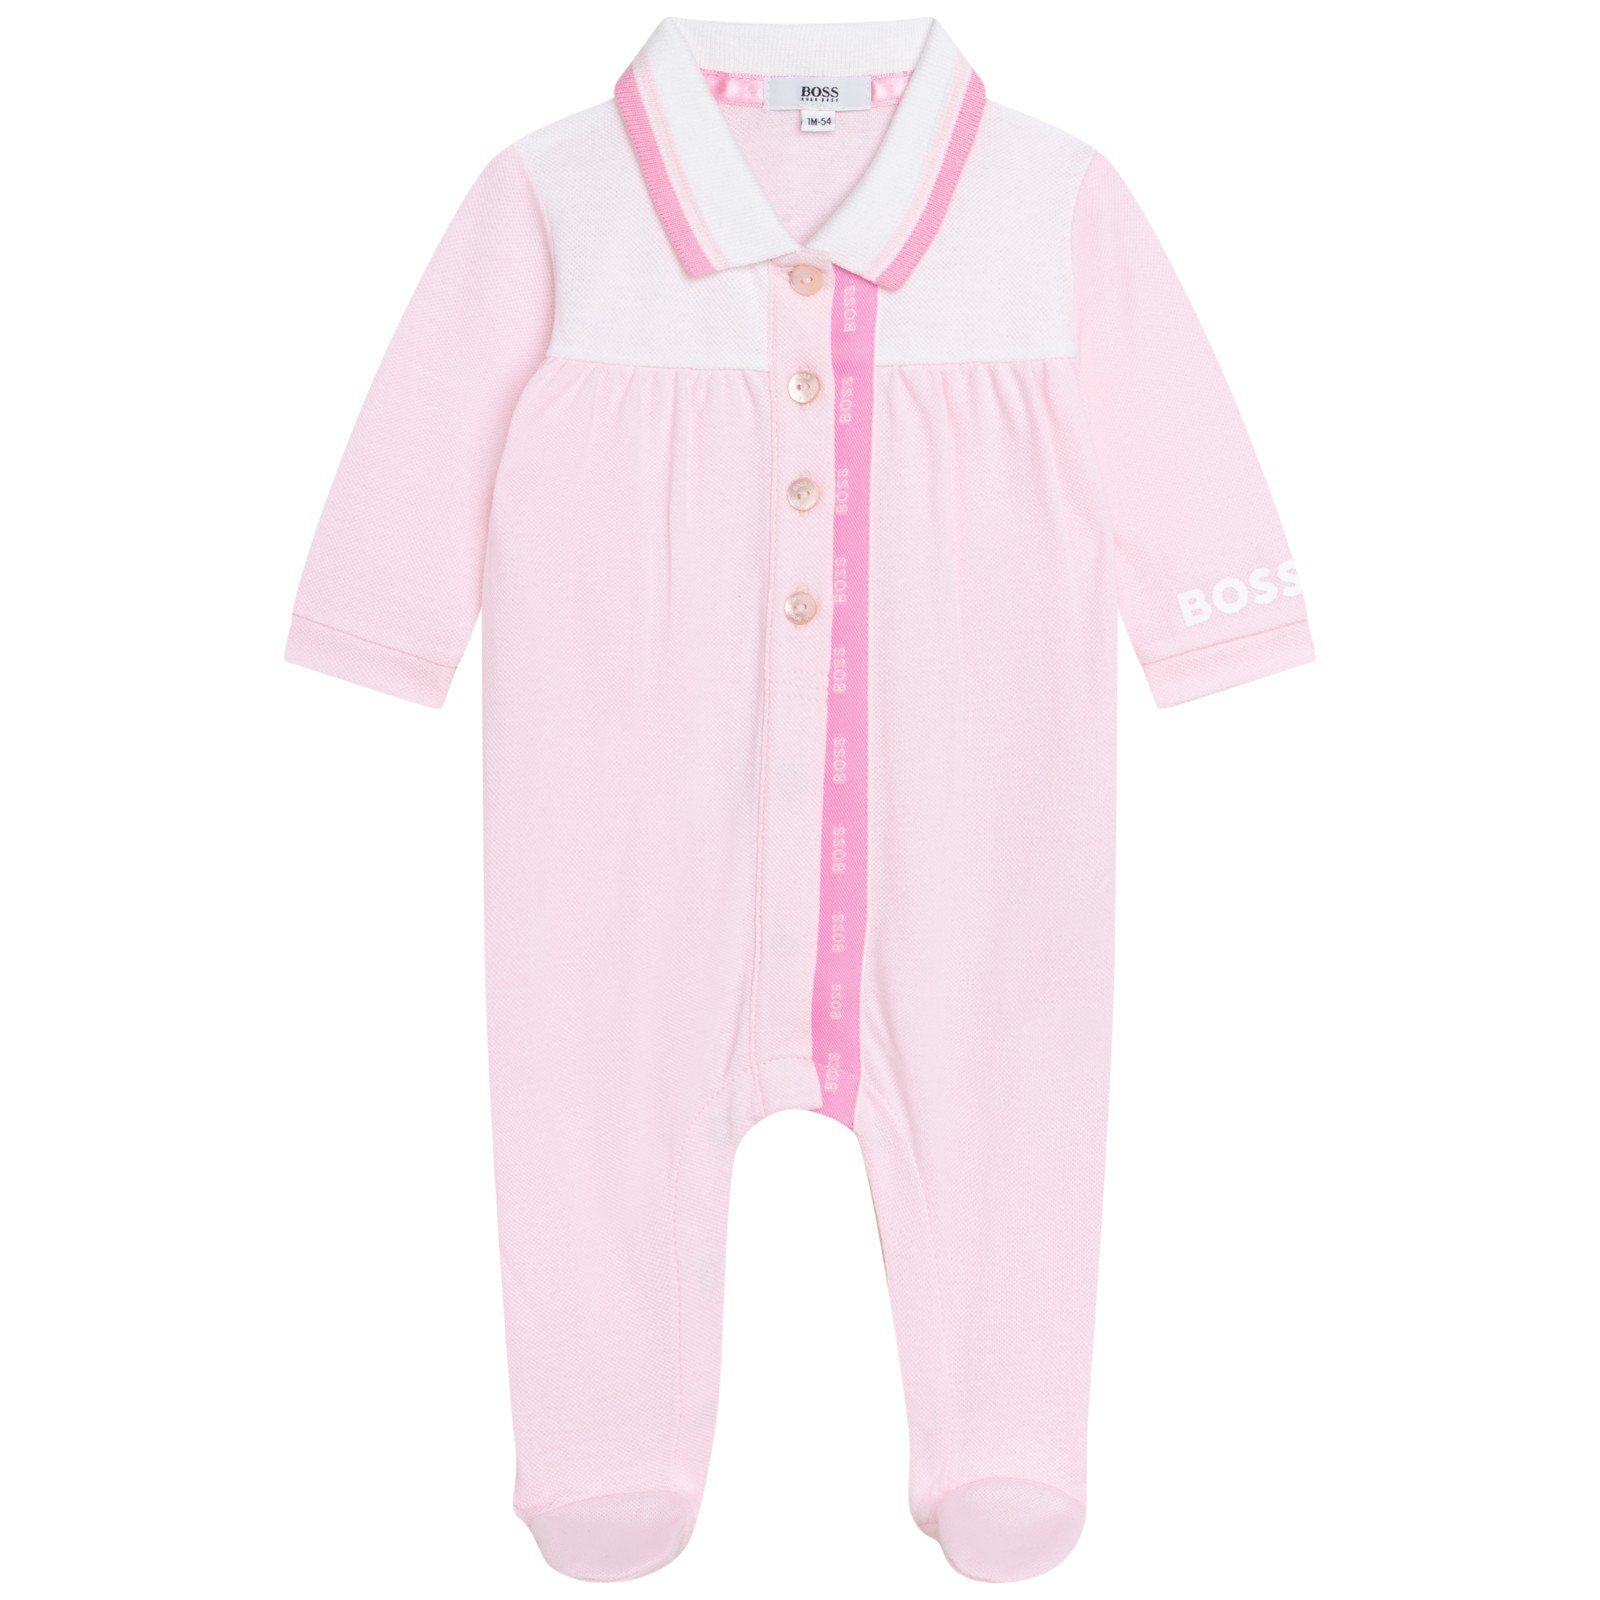 BOSS Strampler HUGO BOSS Baby Strampler Pyjama rosa Hase mit Logo Details